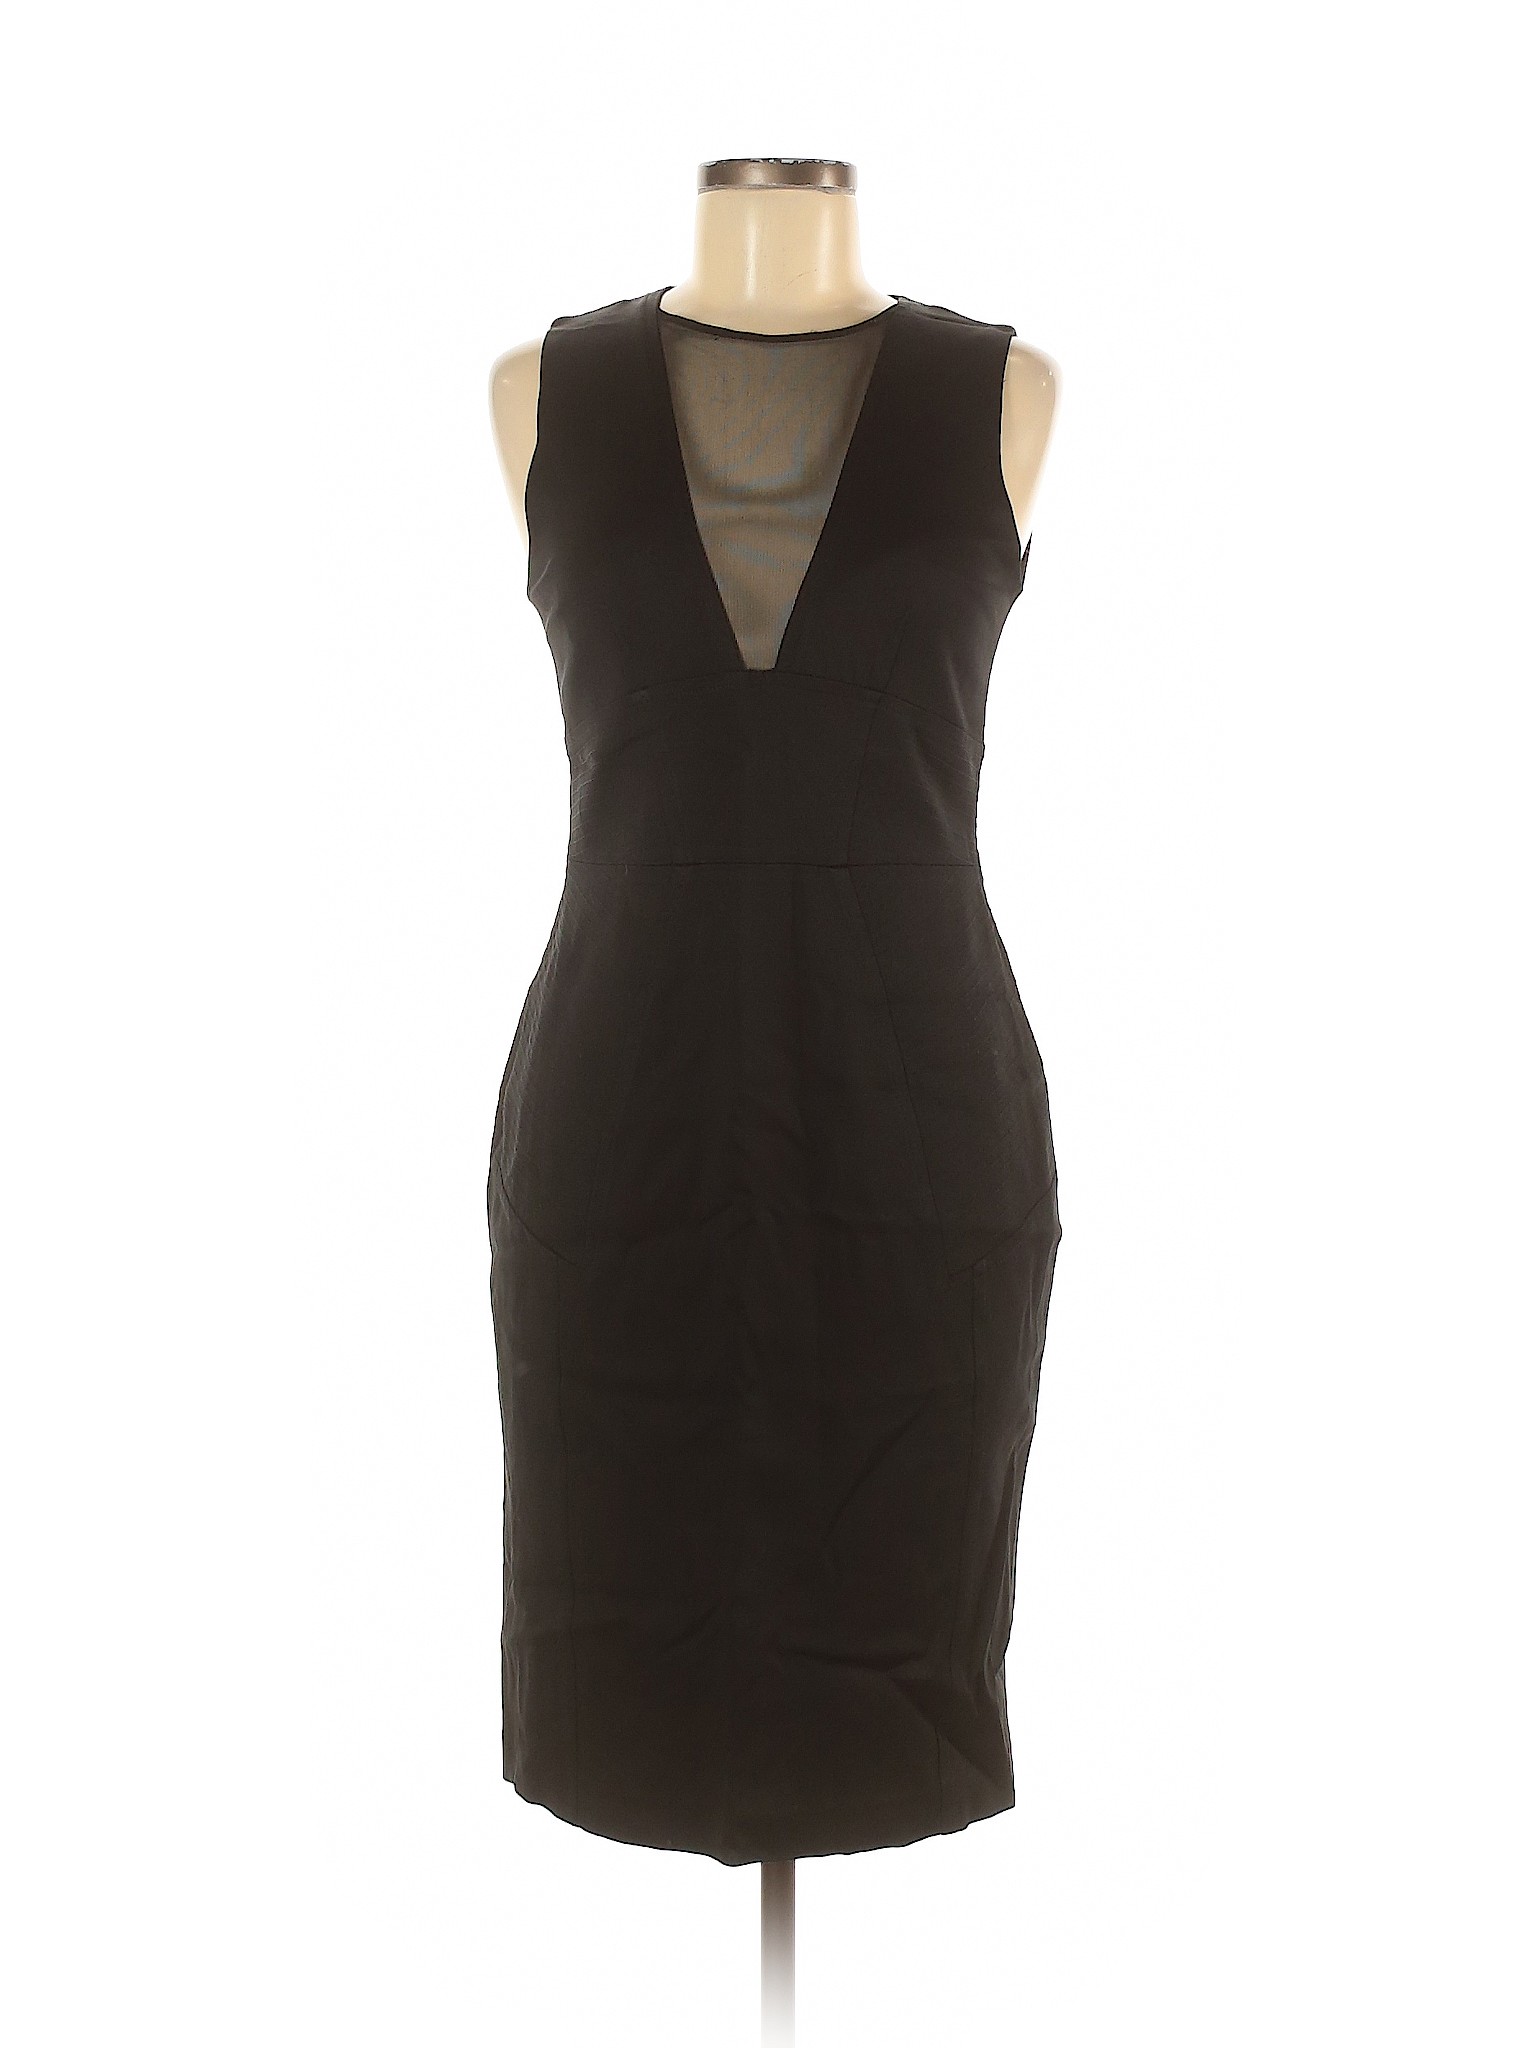 Reiss Women Black Cocktail Dress 6 | eBay